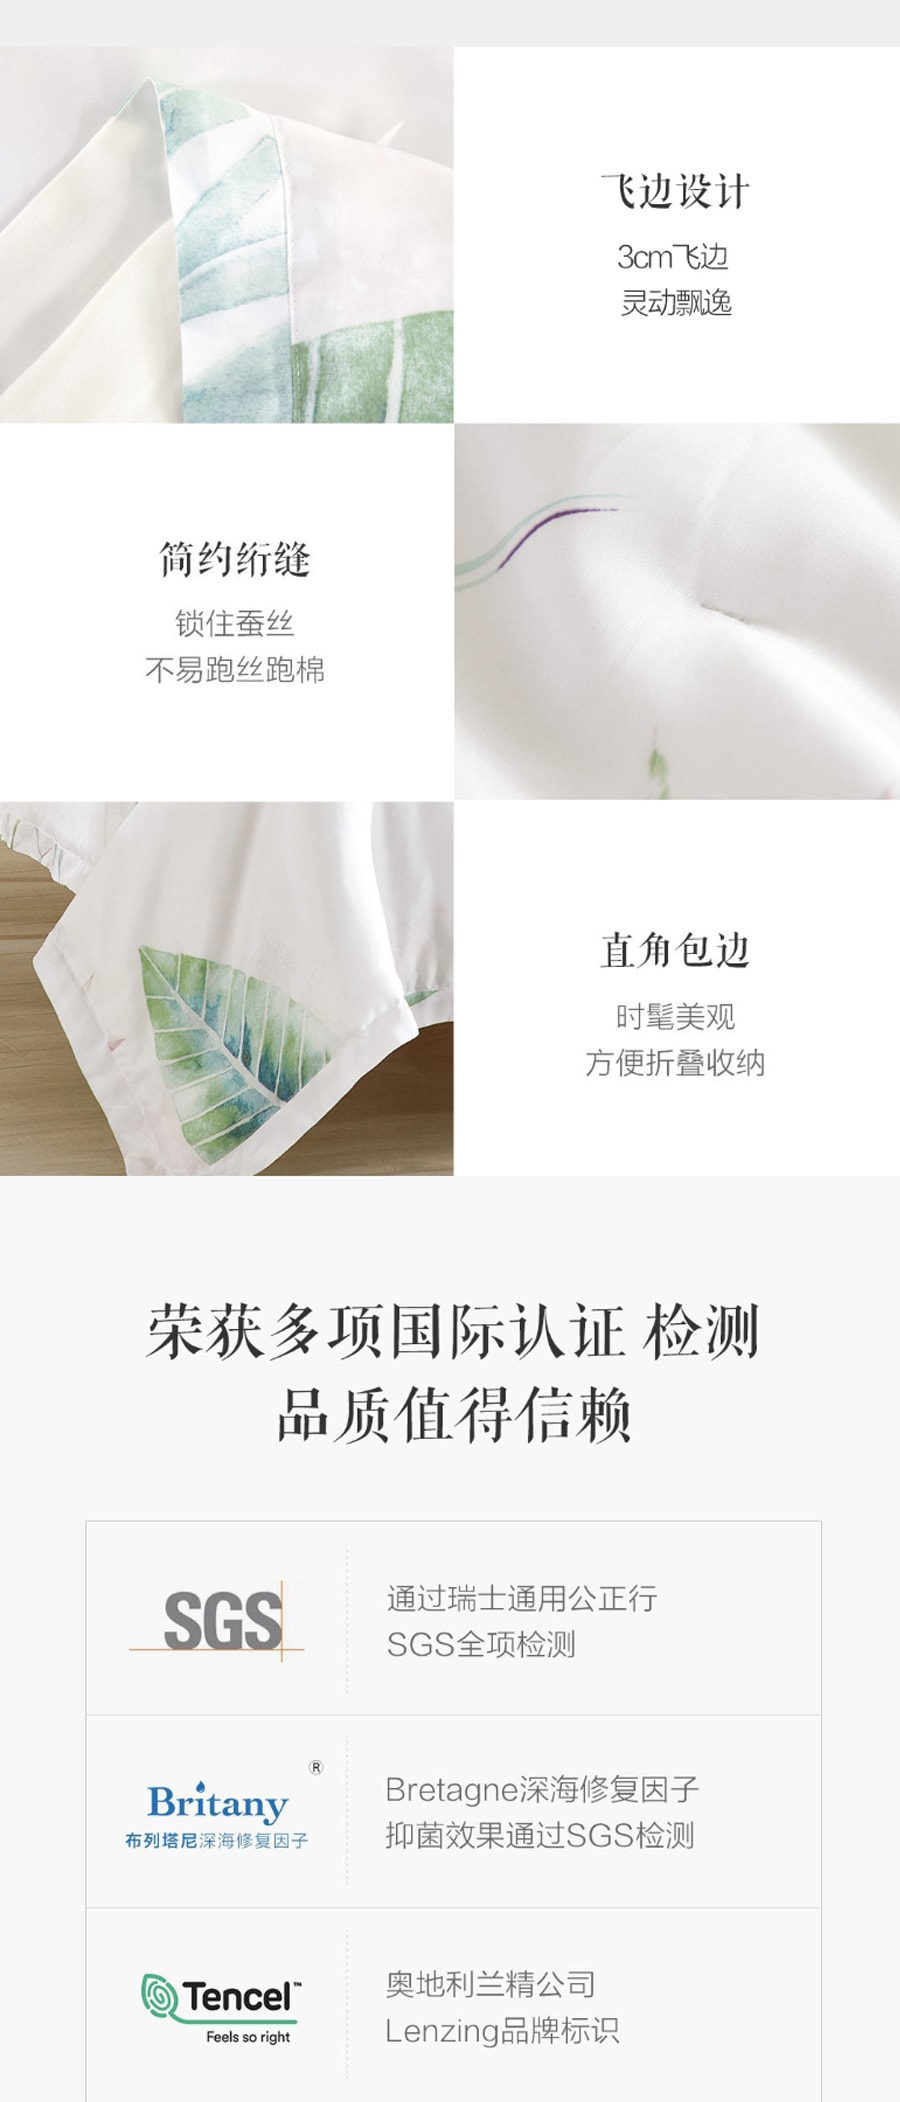 MEIWAN  mulberry silk summer quilt    150*200cm  (single quilt)